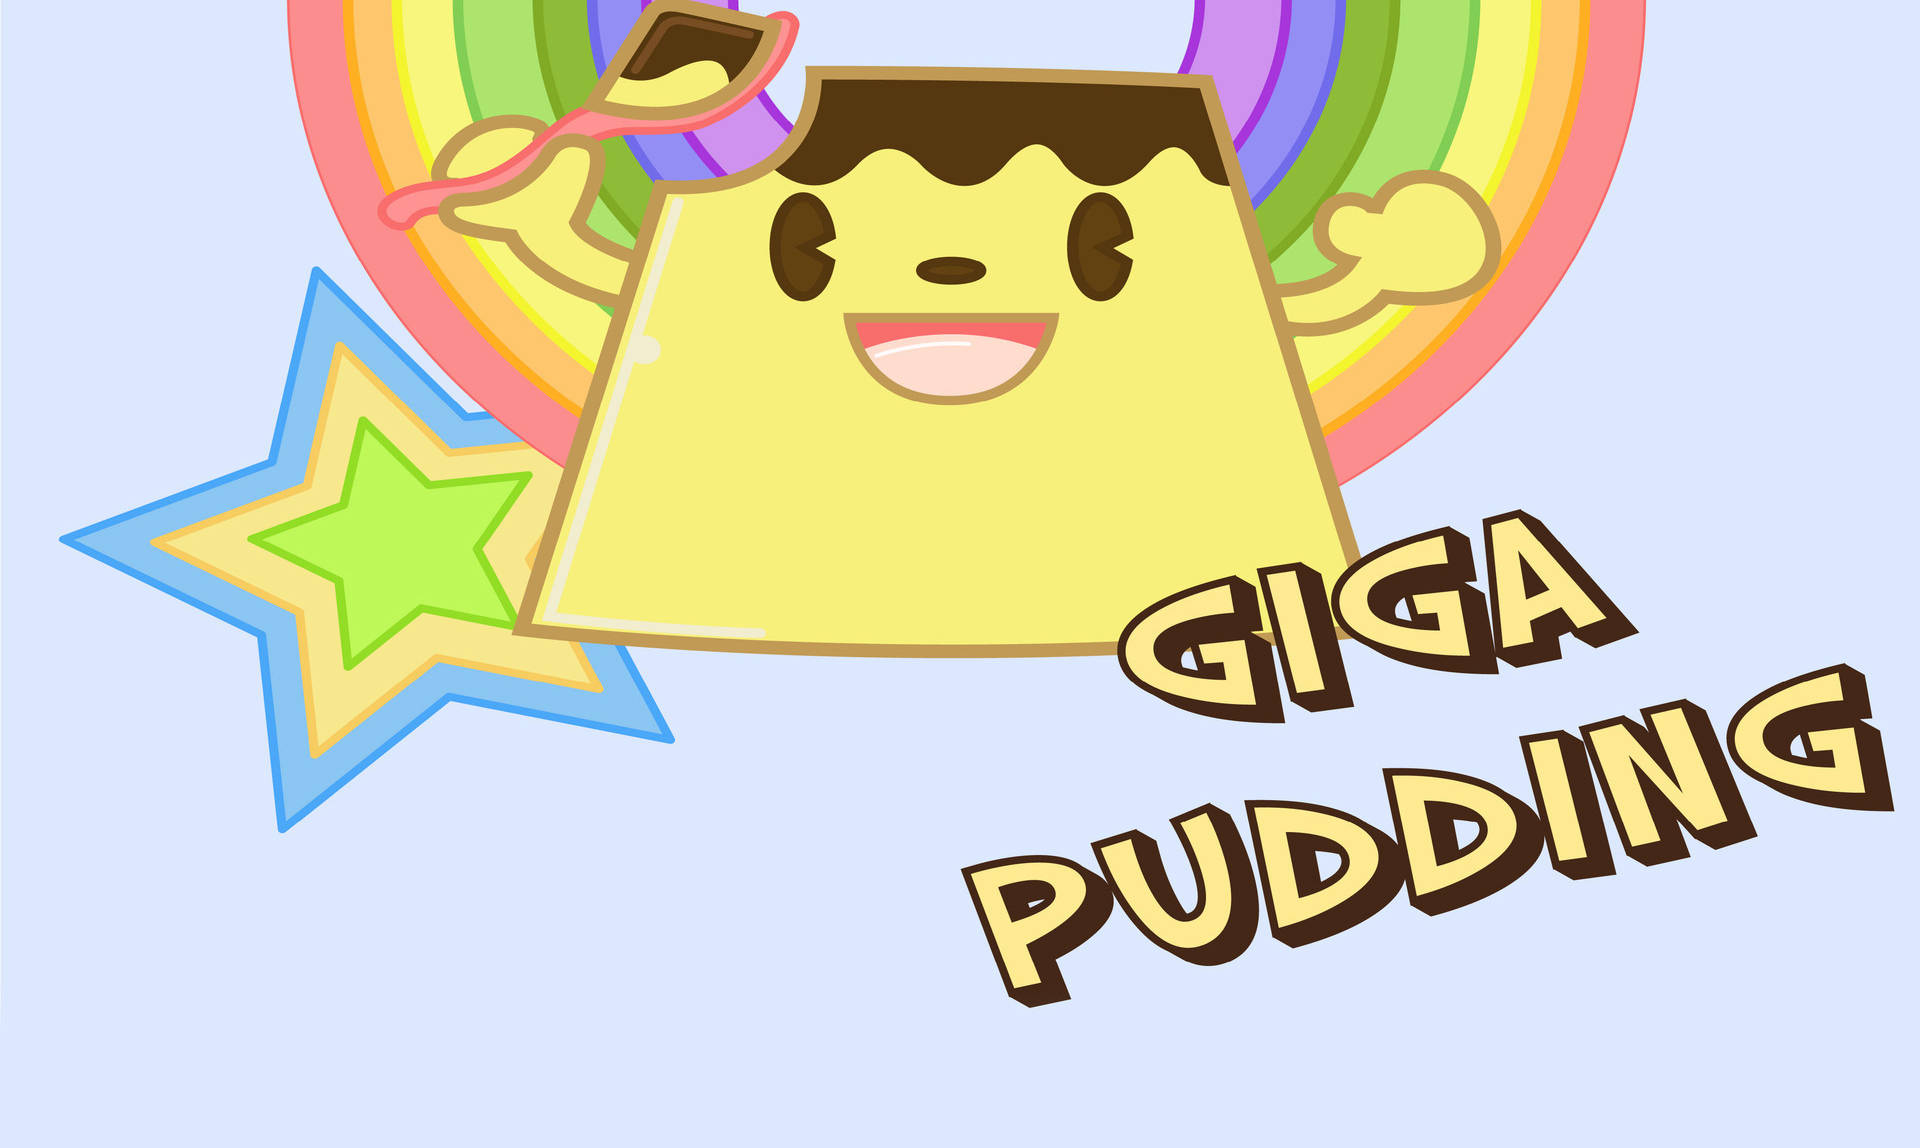 Giga Pudding And Rainbow Meme Wallpaper